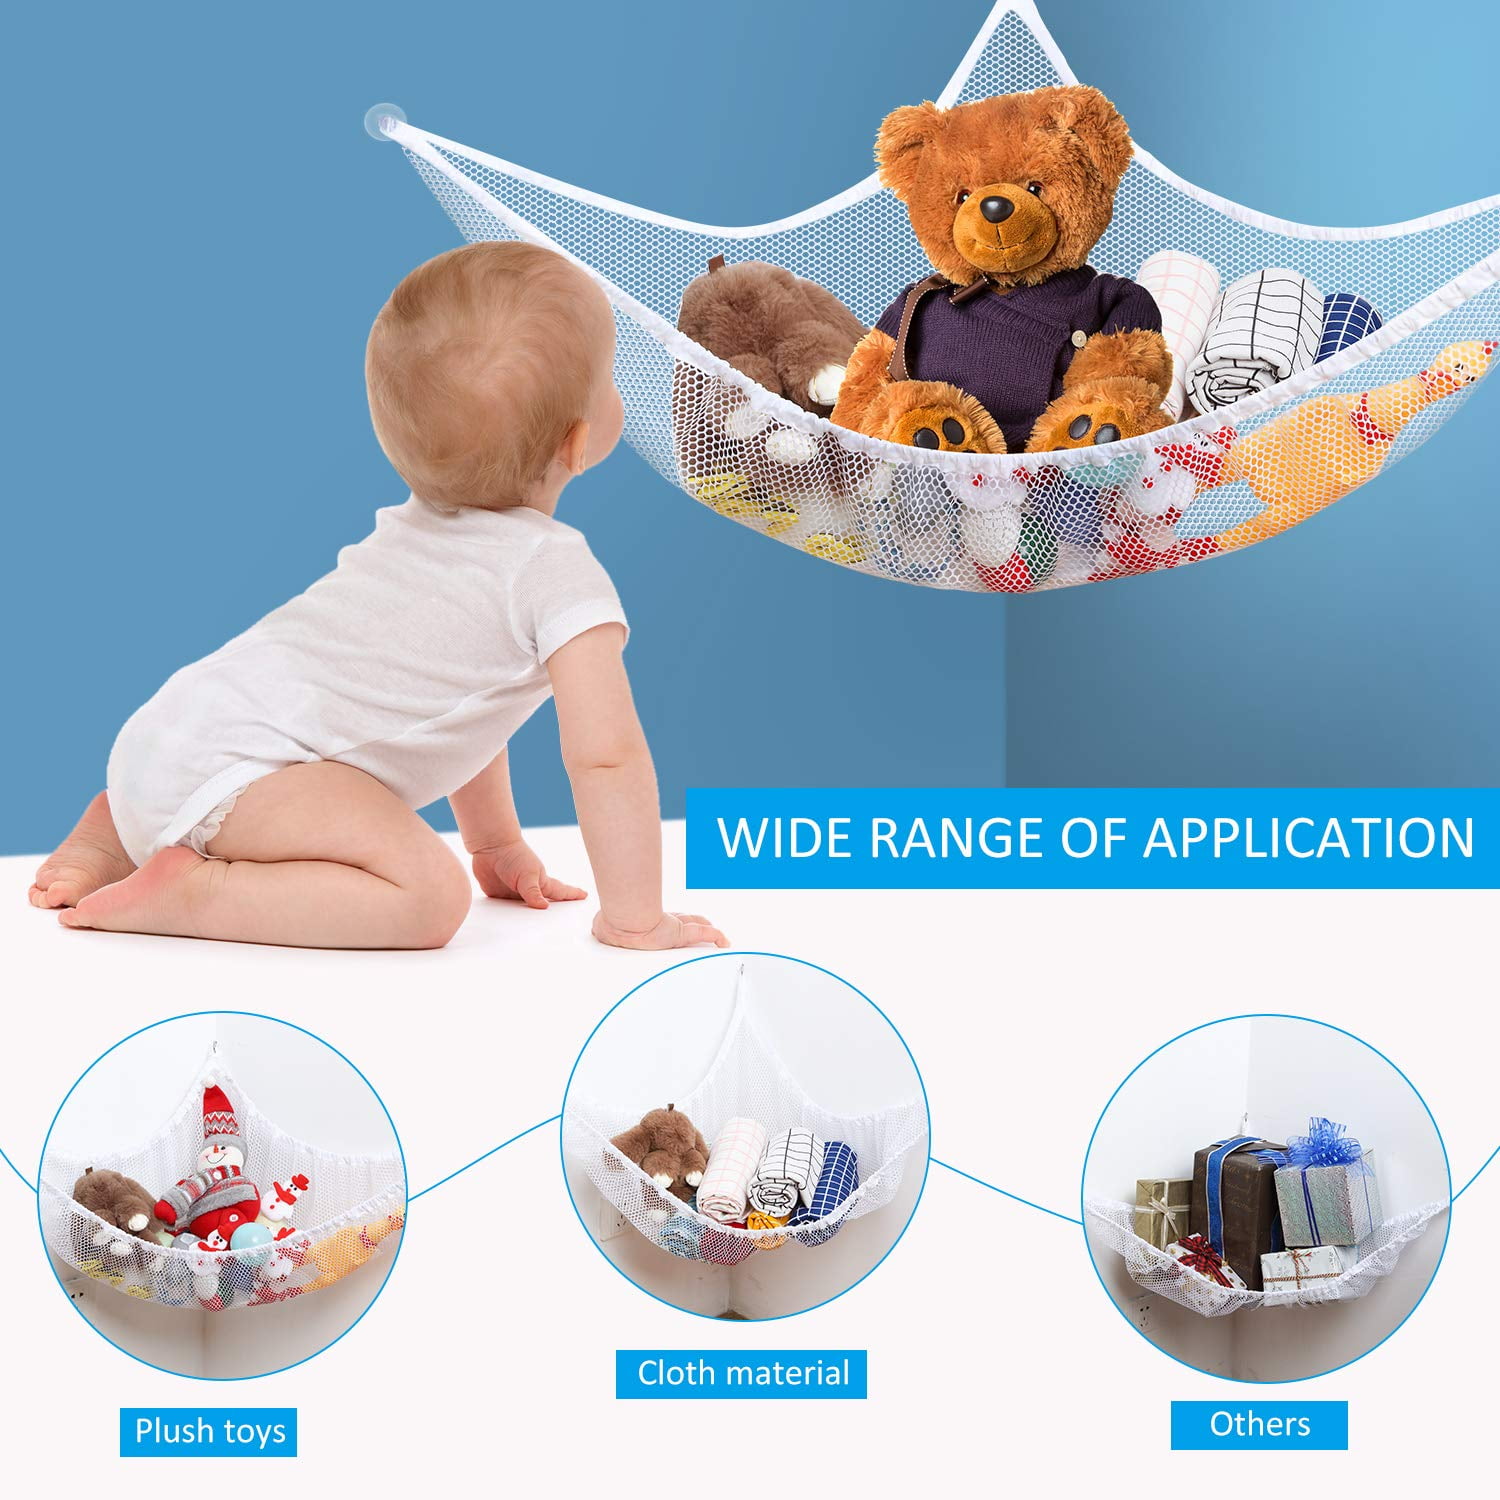 "3 FEET" Toy Hammock Net Organize Stuffed Animals And Bath Kids Toys 